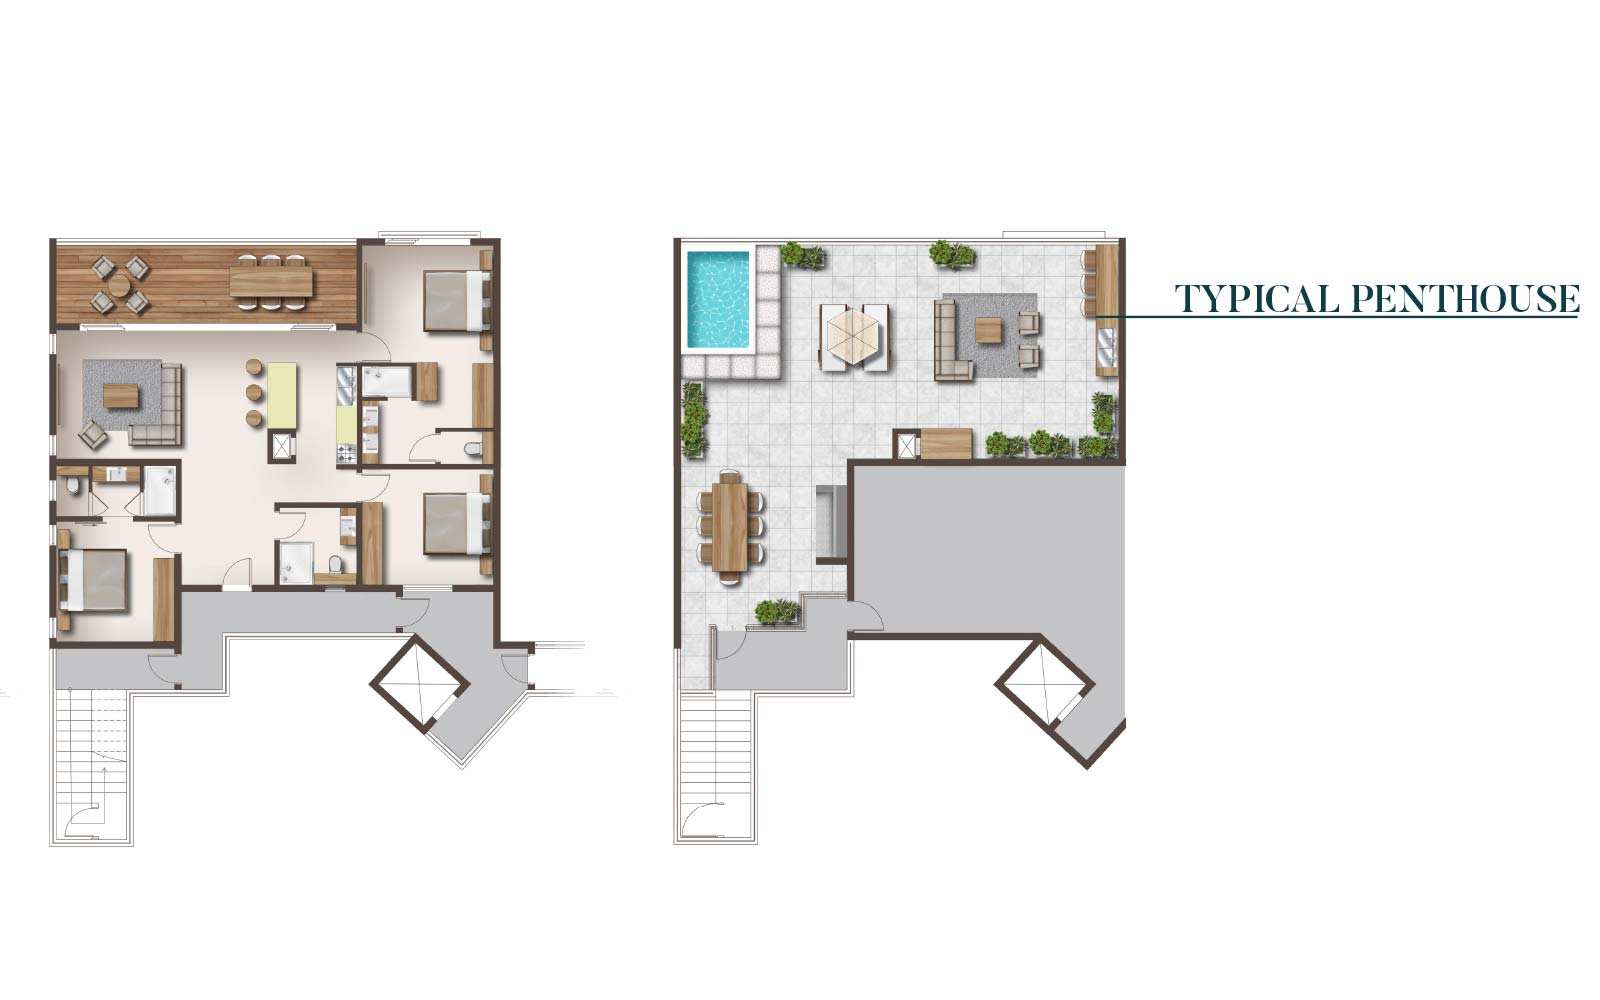 Casa-Alegria-penthouse-Floor-Plan-April-23-2020